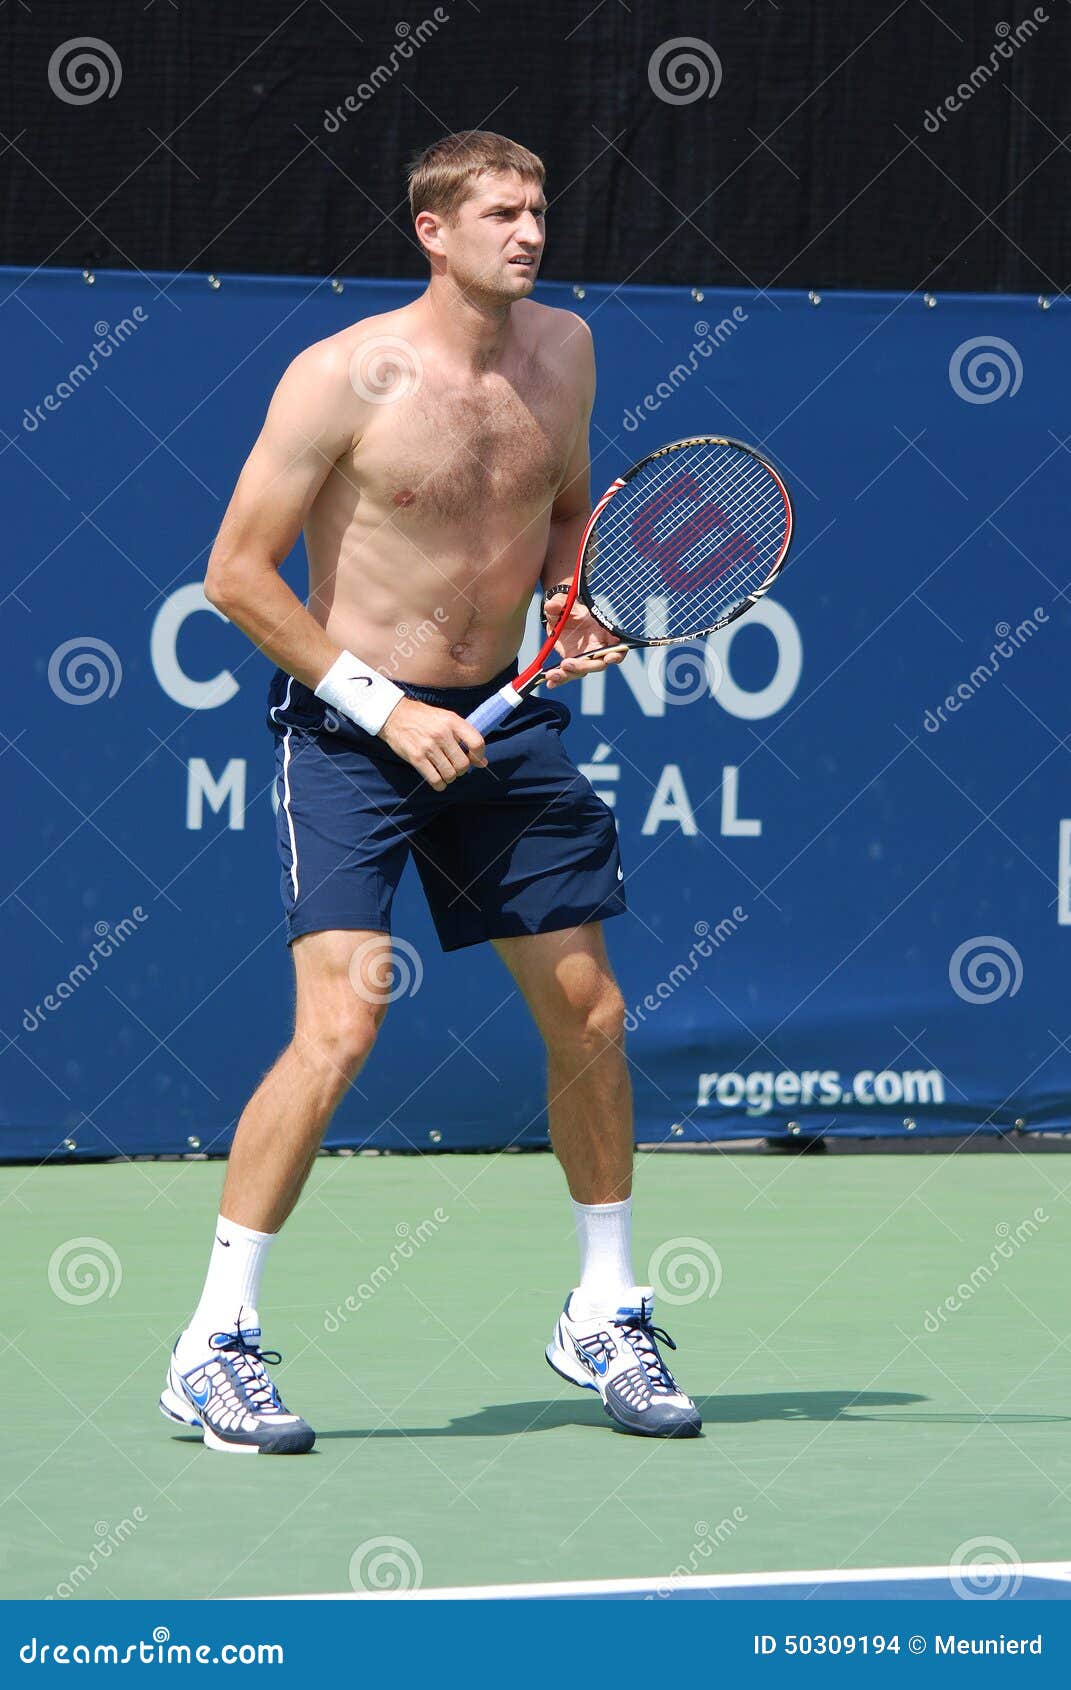 Max Mirnyi, Overview, ATP Tour